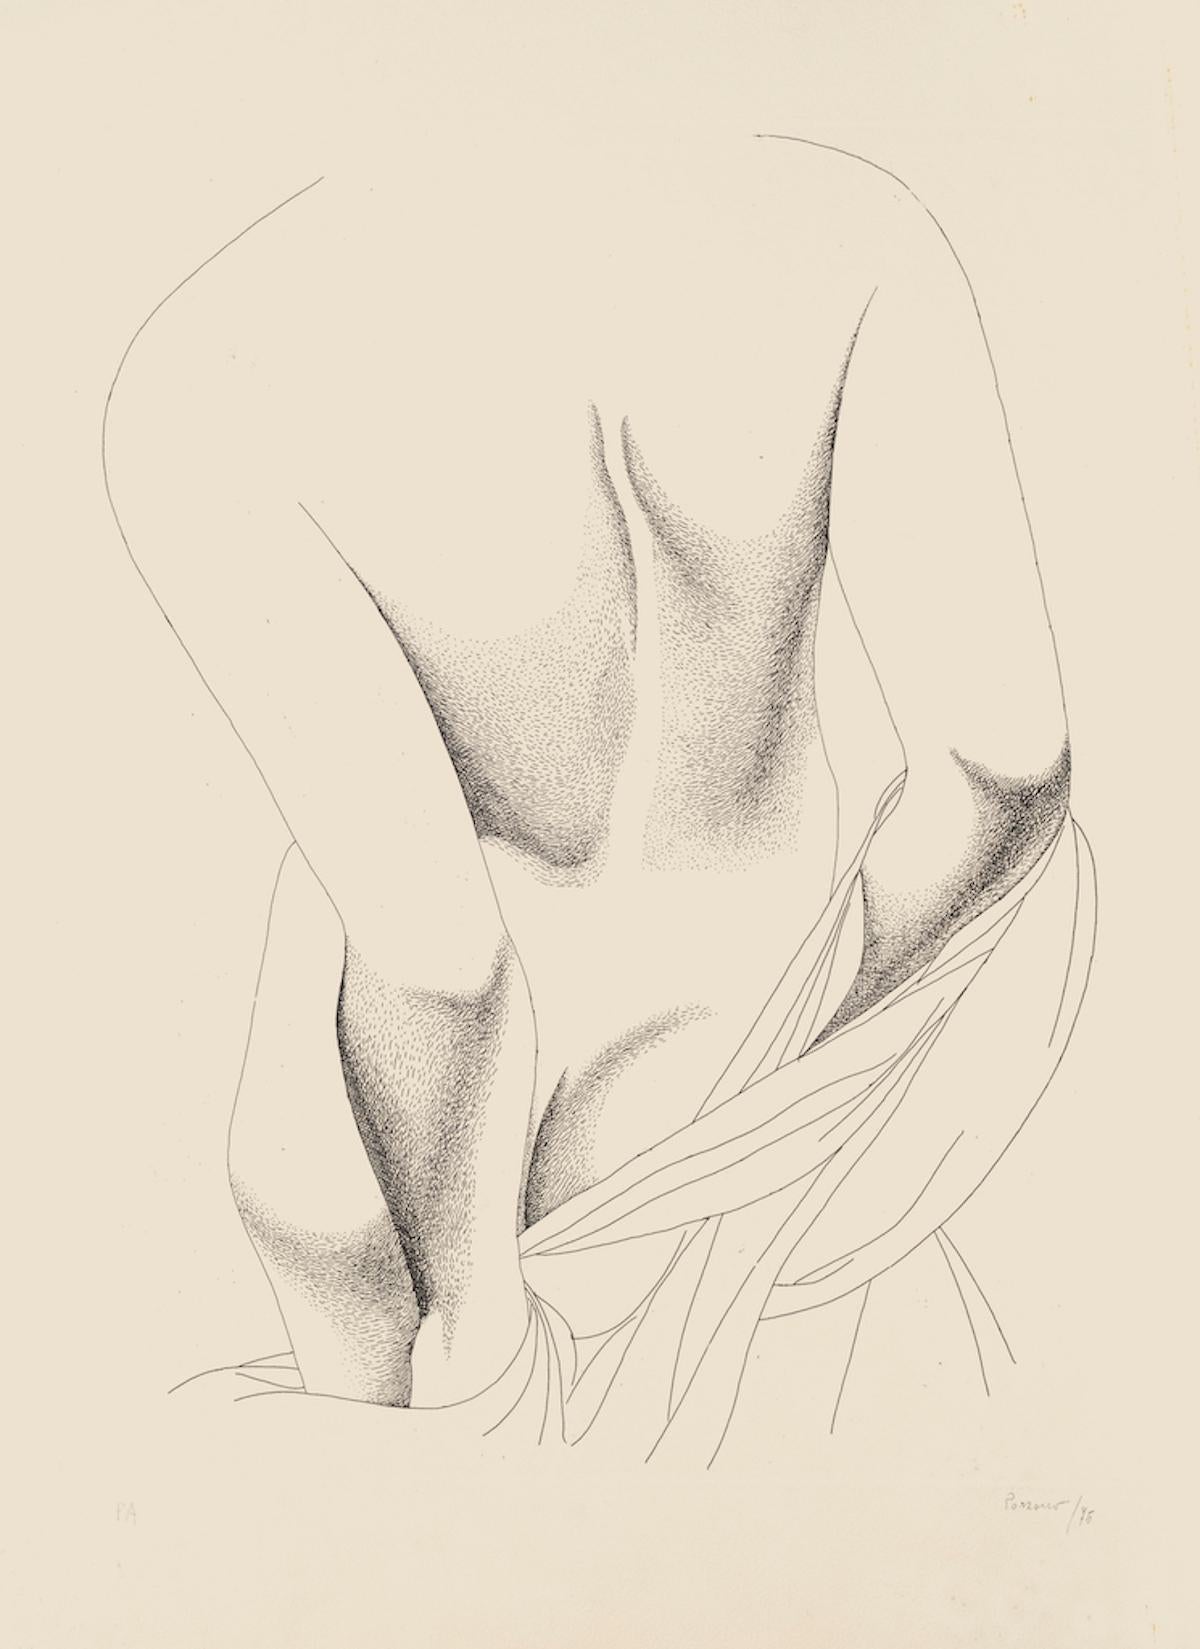 Nude from the Back - Original Etching by Giacomo Porzano - 1975